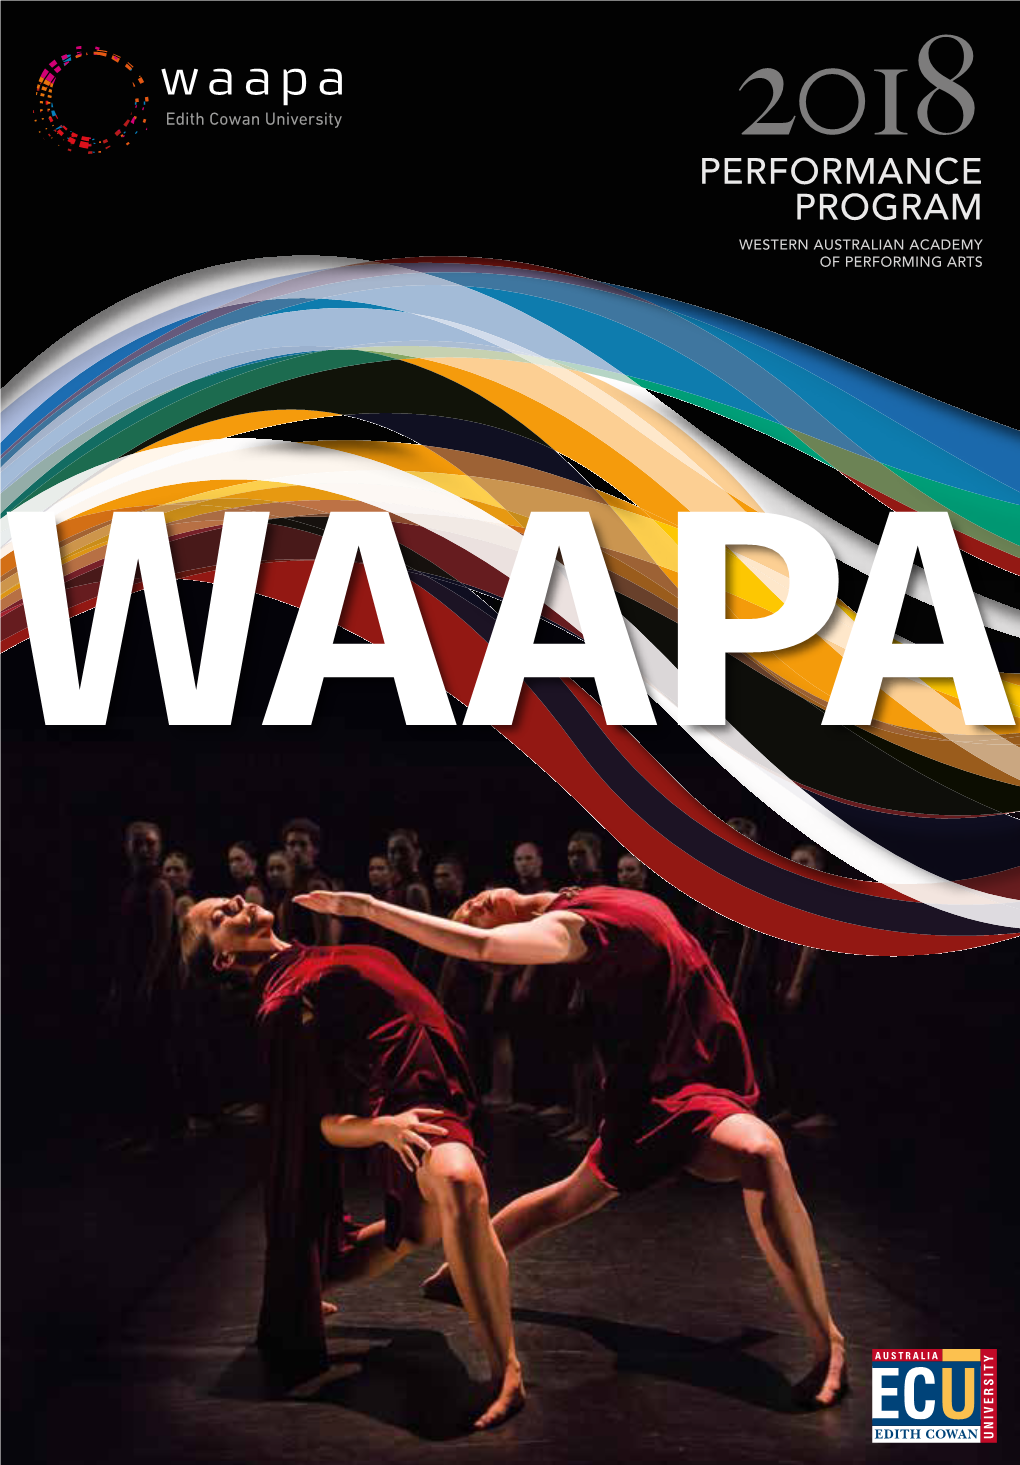 WAAPA 2018 Performance Program